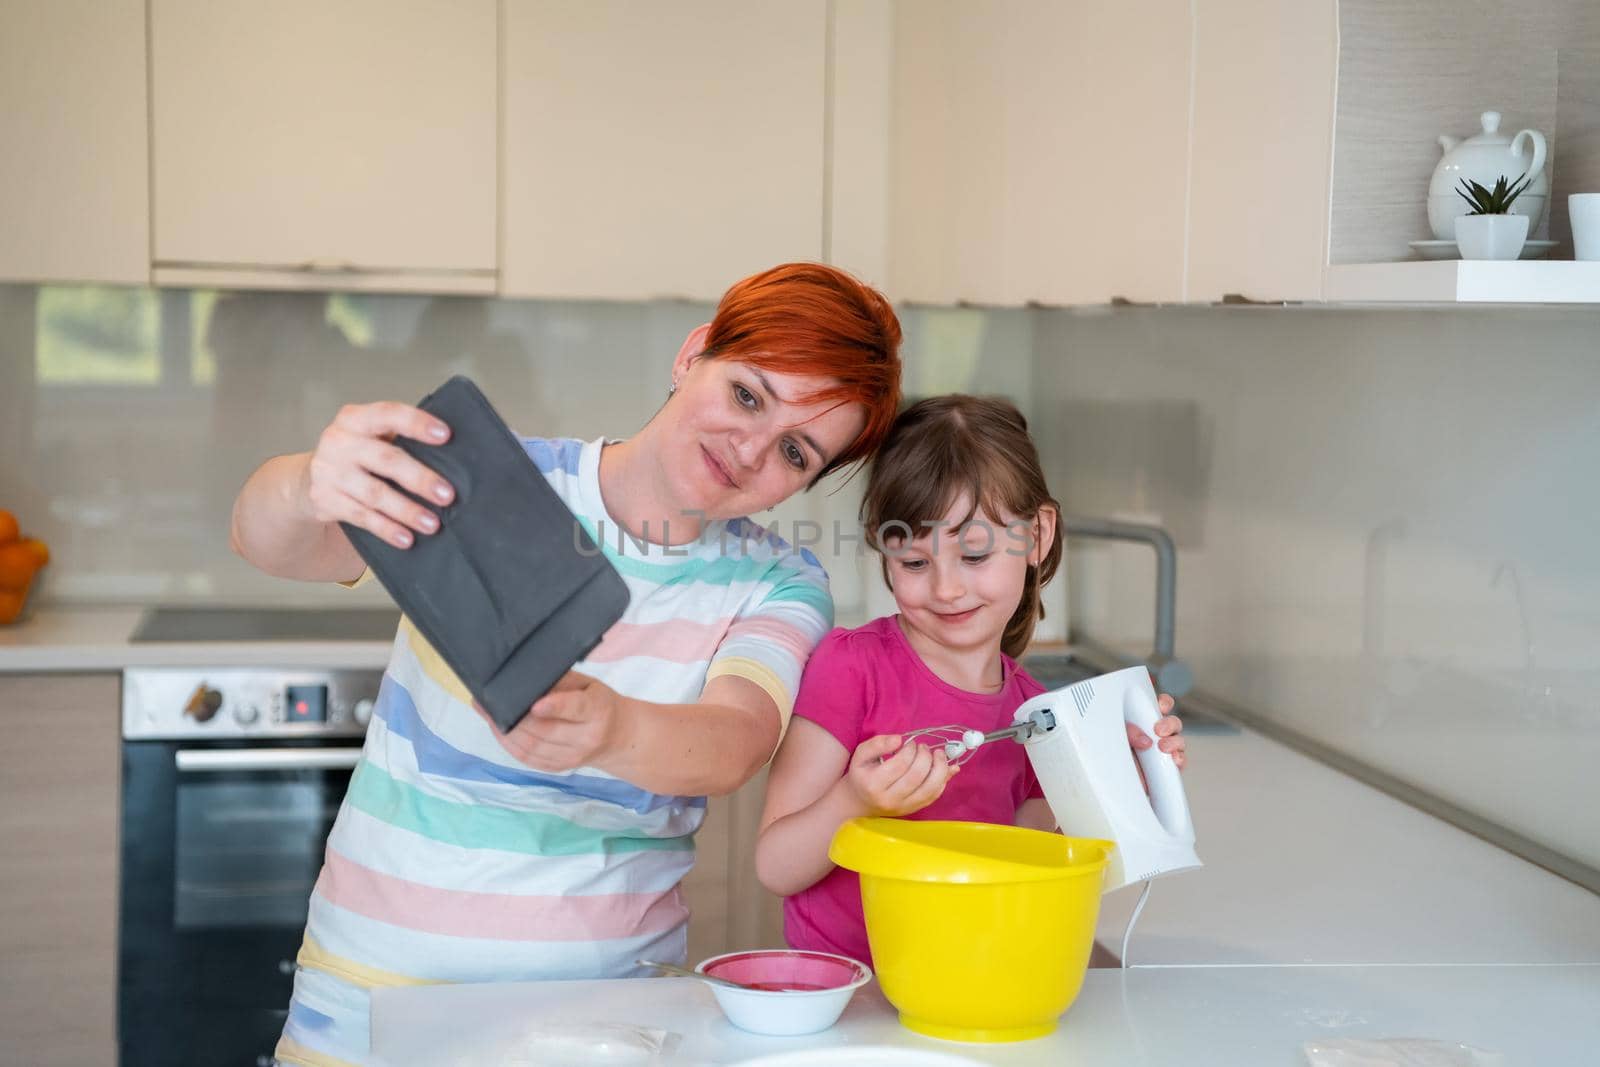 little girl and mom making tastz cake in kithen, family having fun at home 